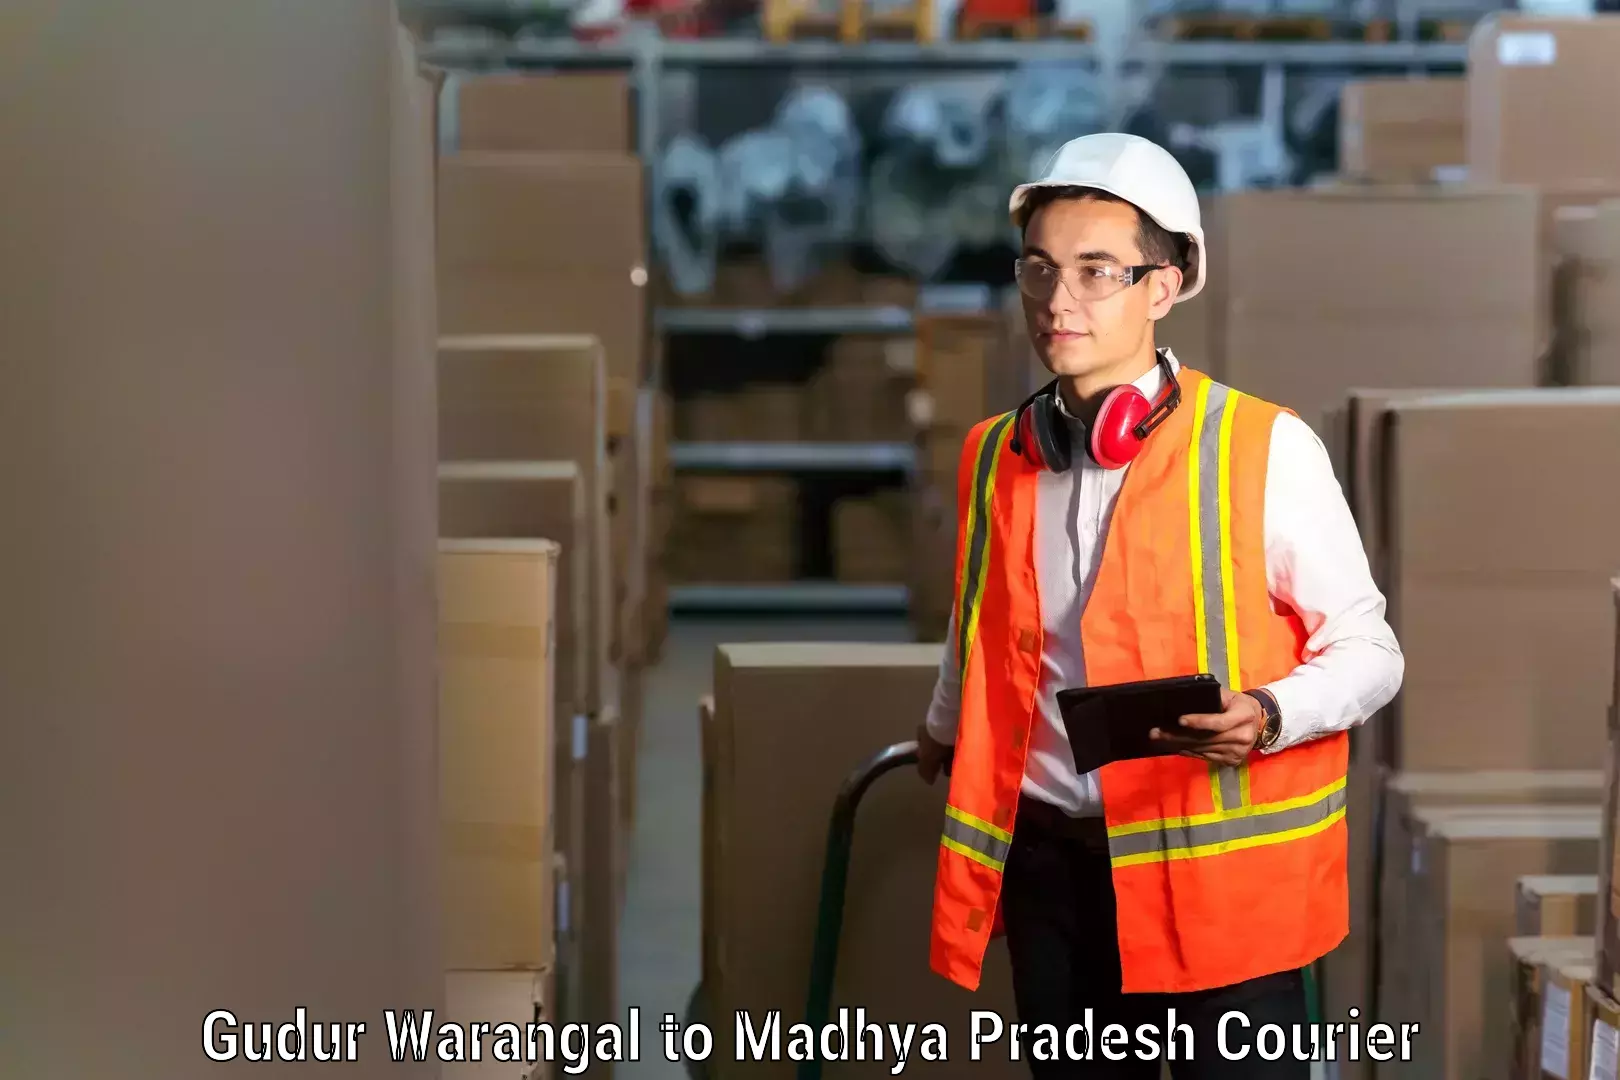 Furniture delivery service Gudur Warangal to Tendukheda